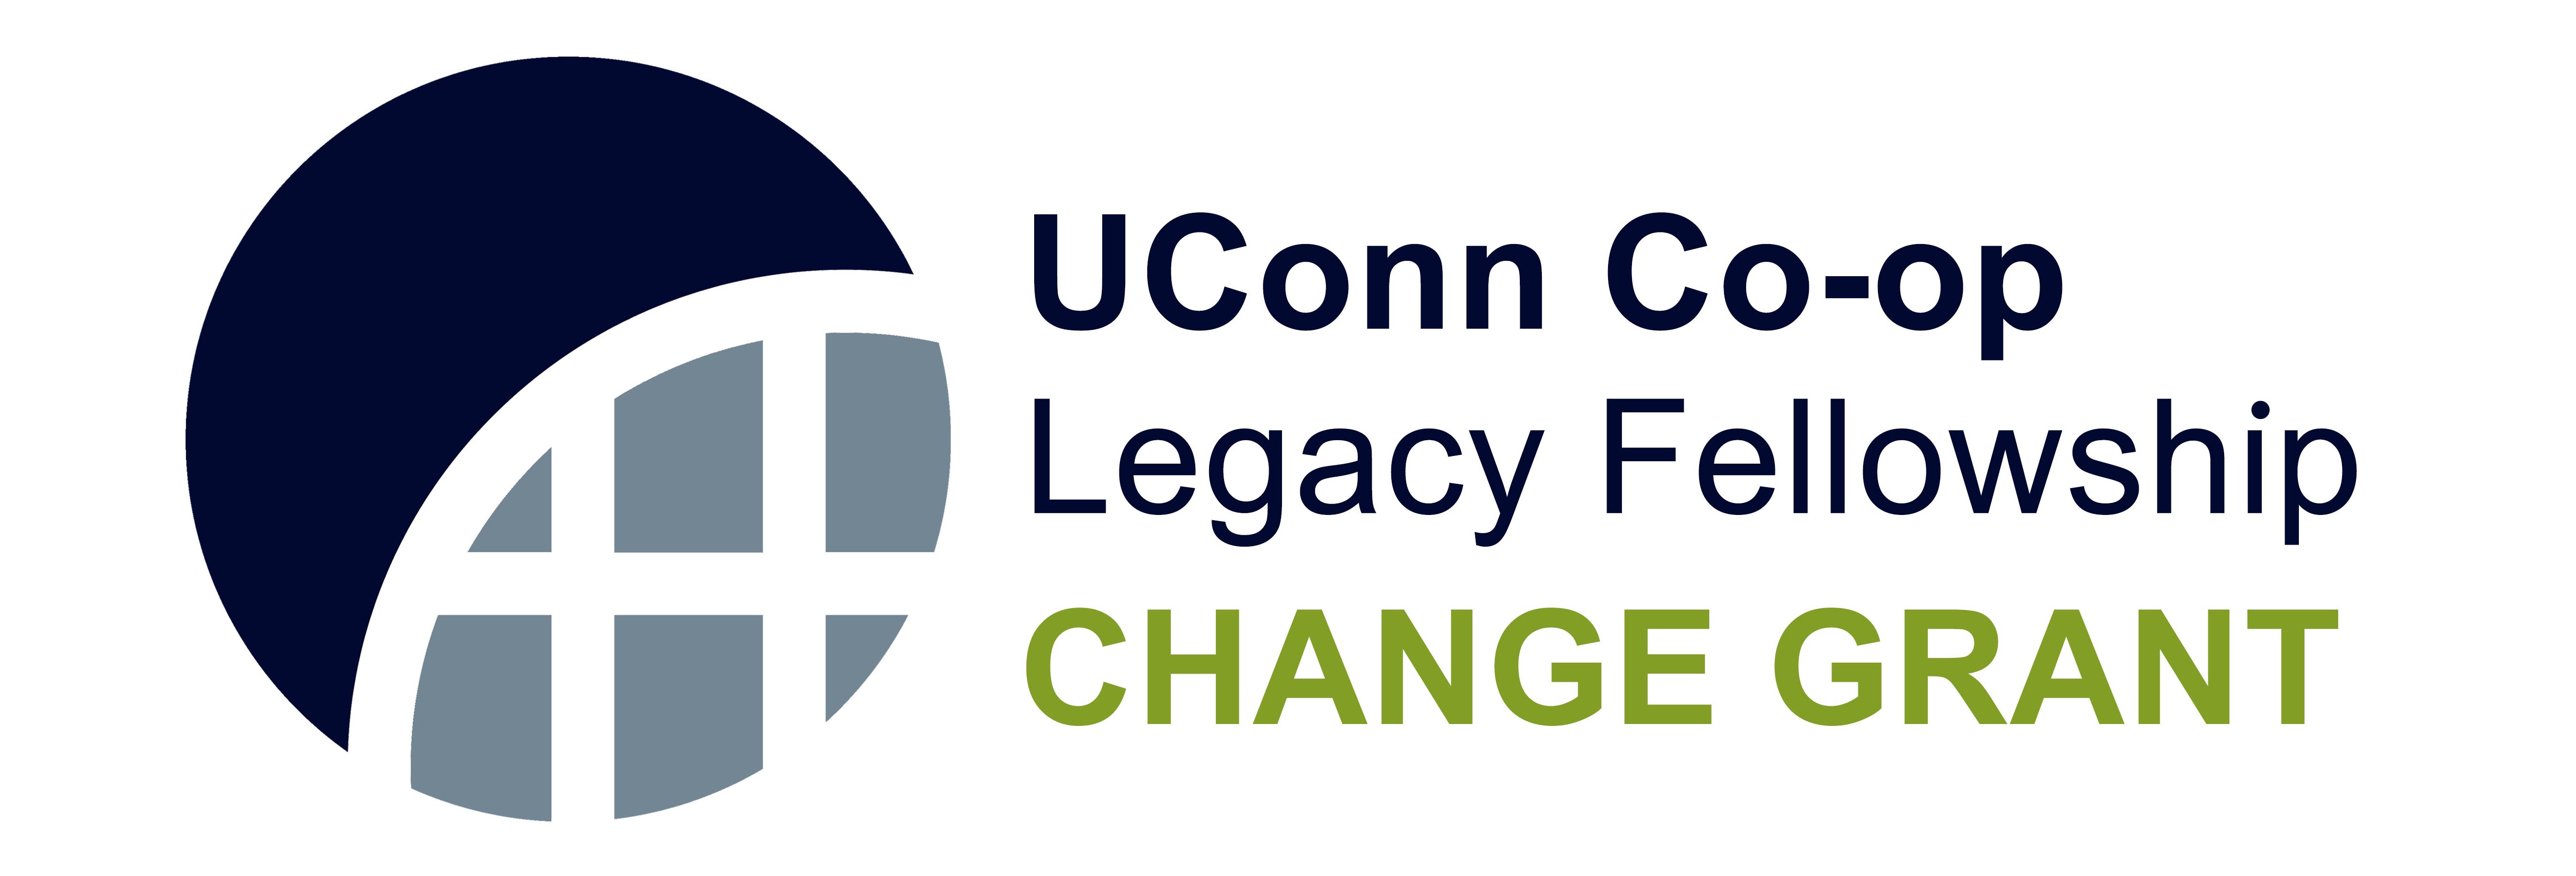 UConn Co-op Legacy Fellowship - Change Grant Logo